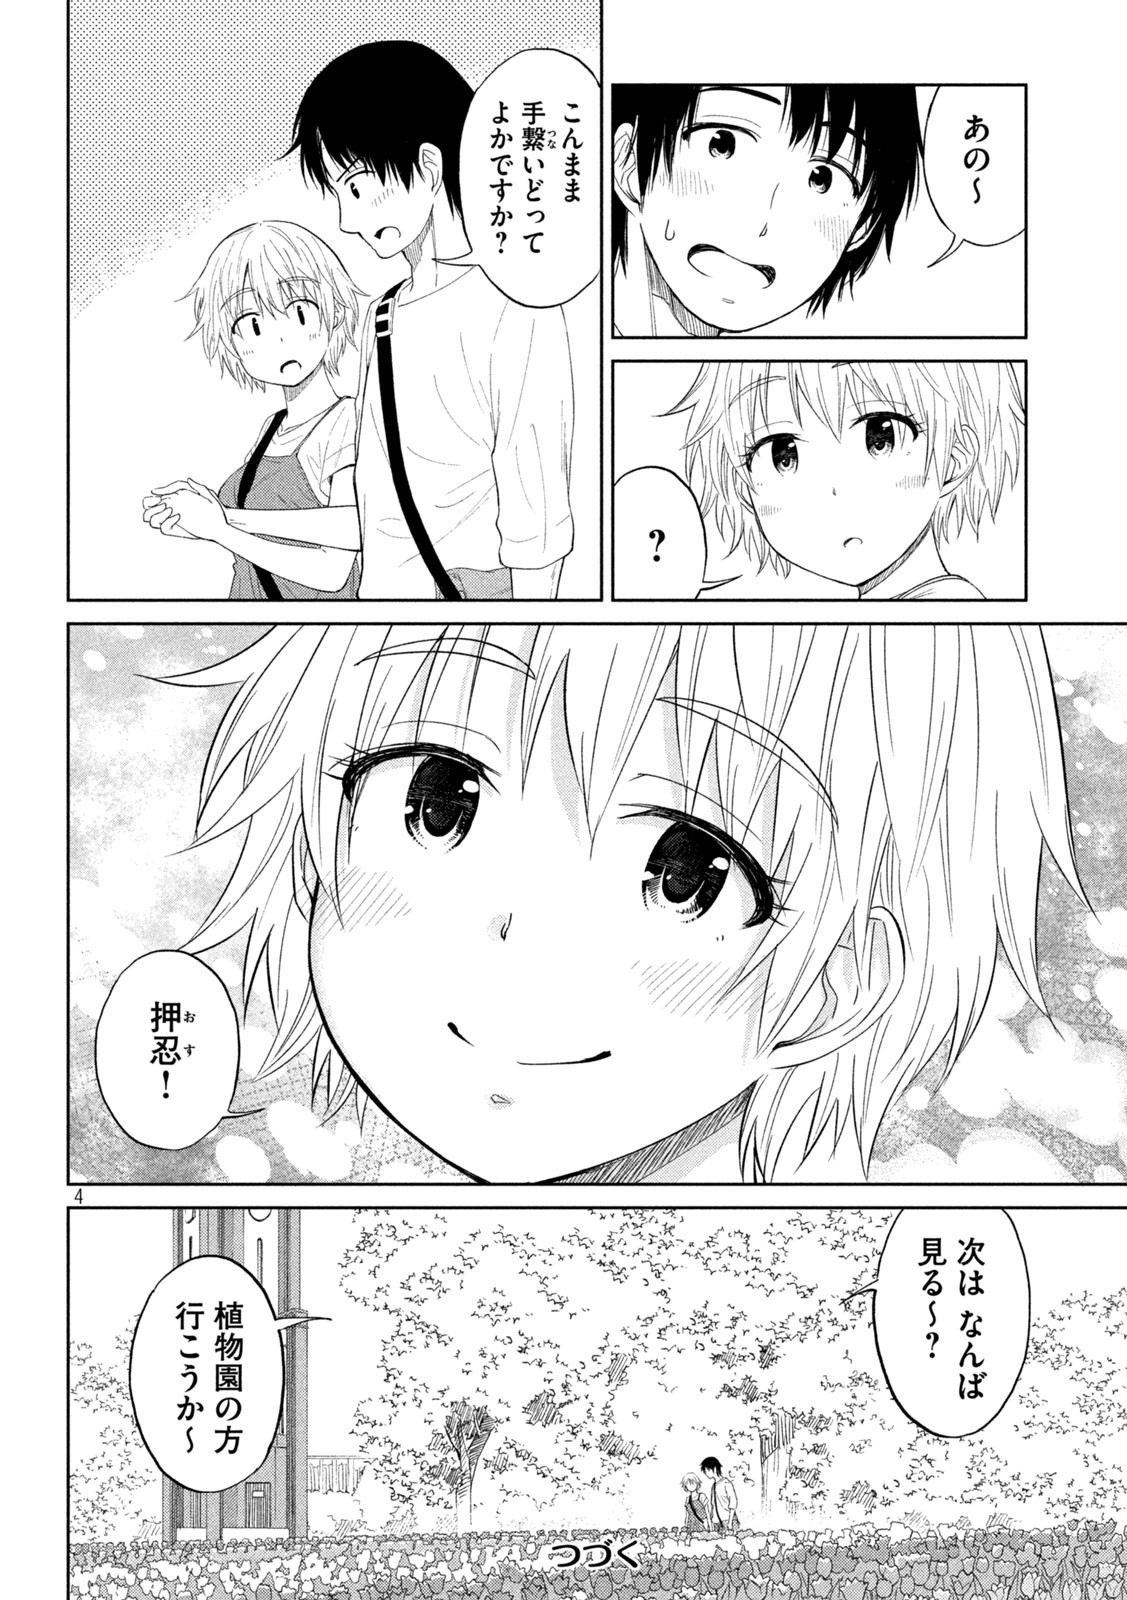 Koharu haru! - Chapter 104 - Page 4